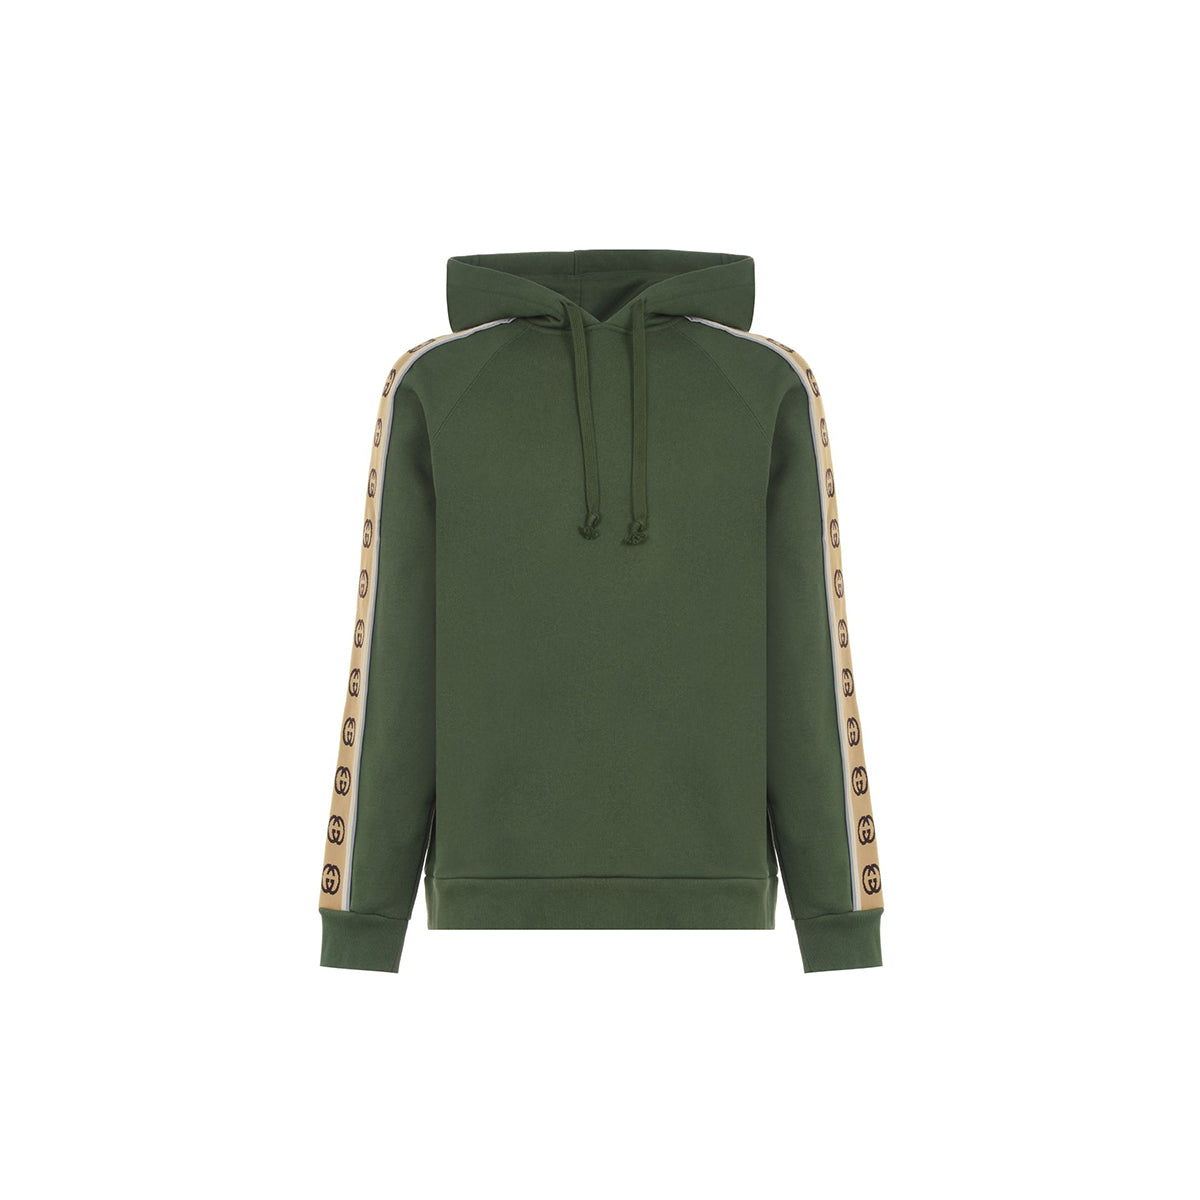 gucci hoodie green